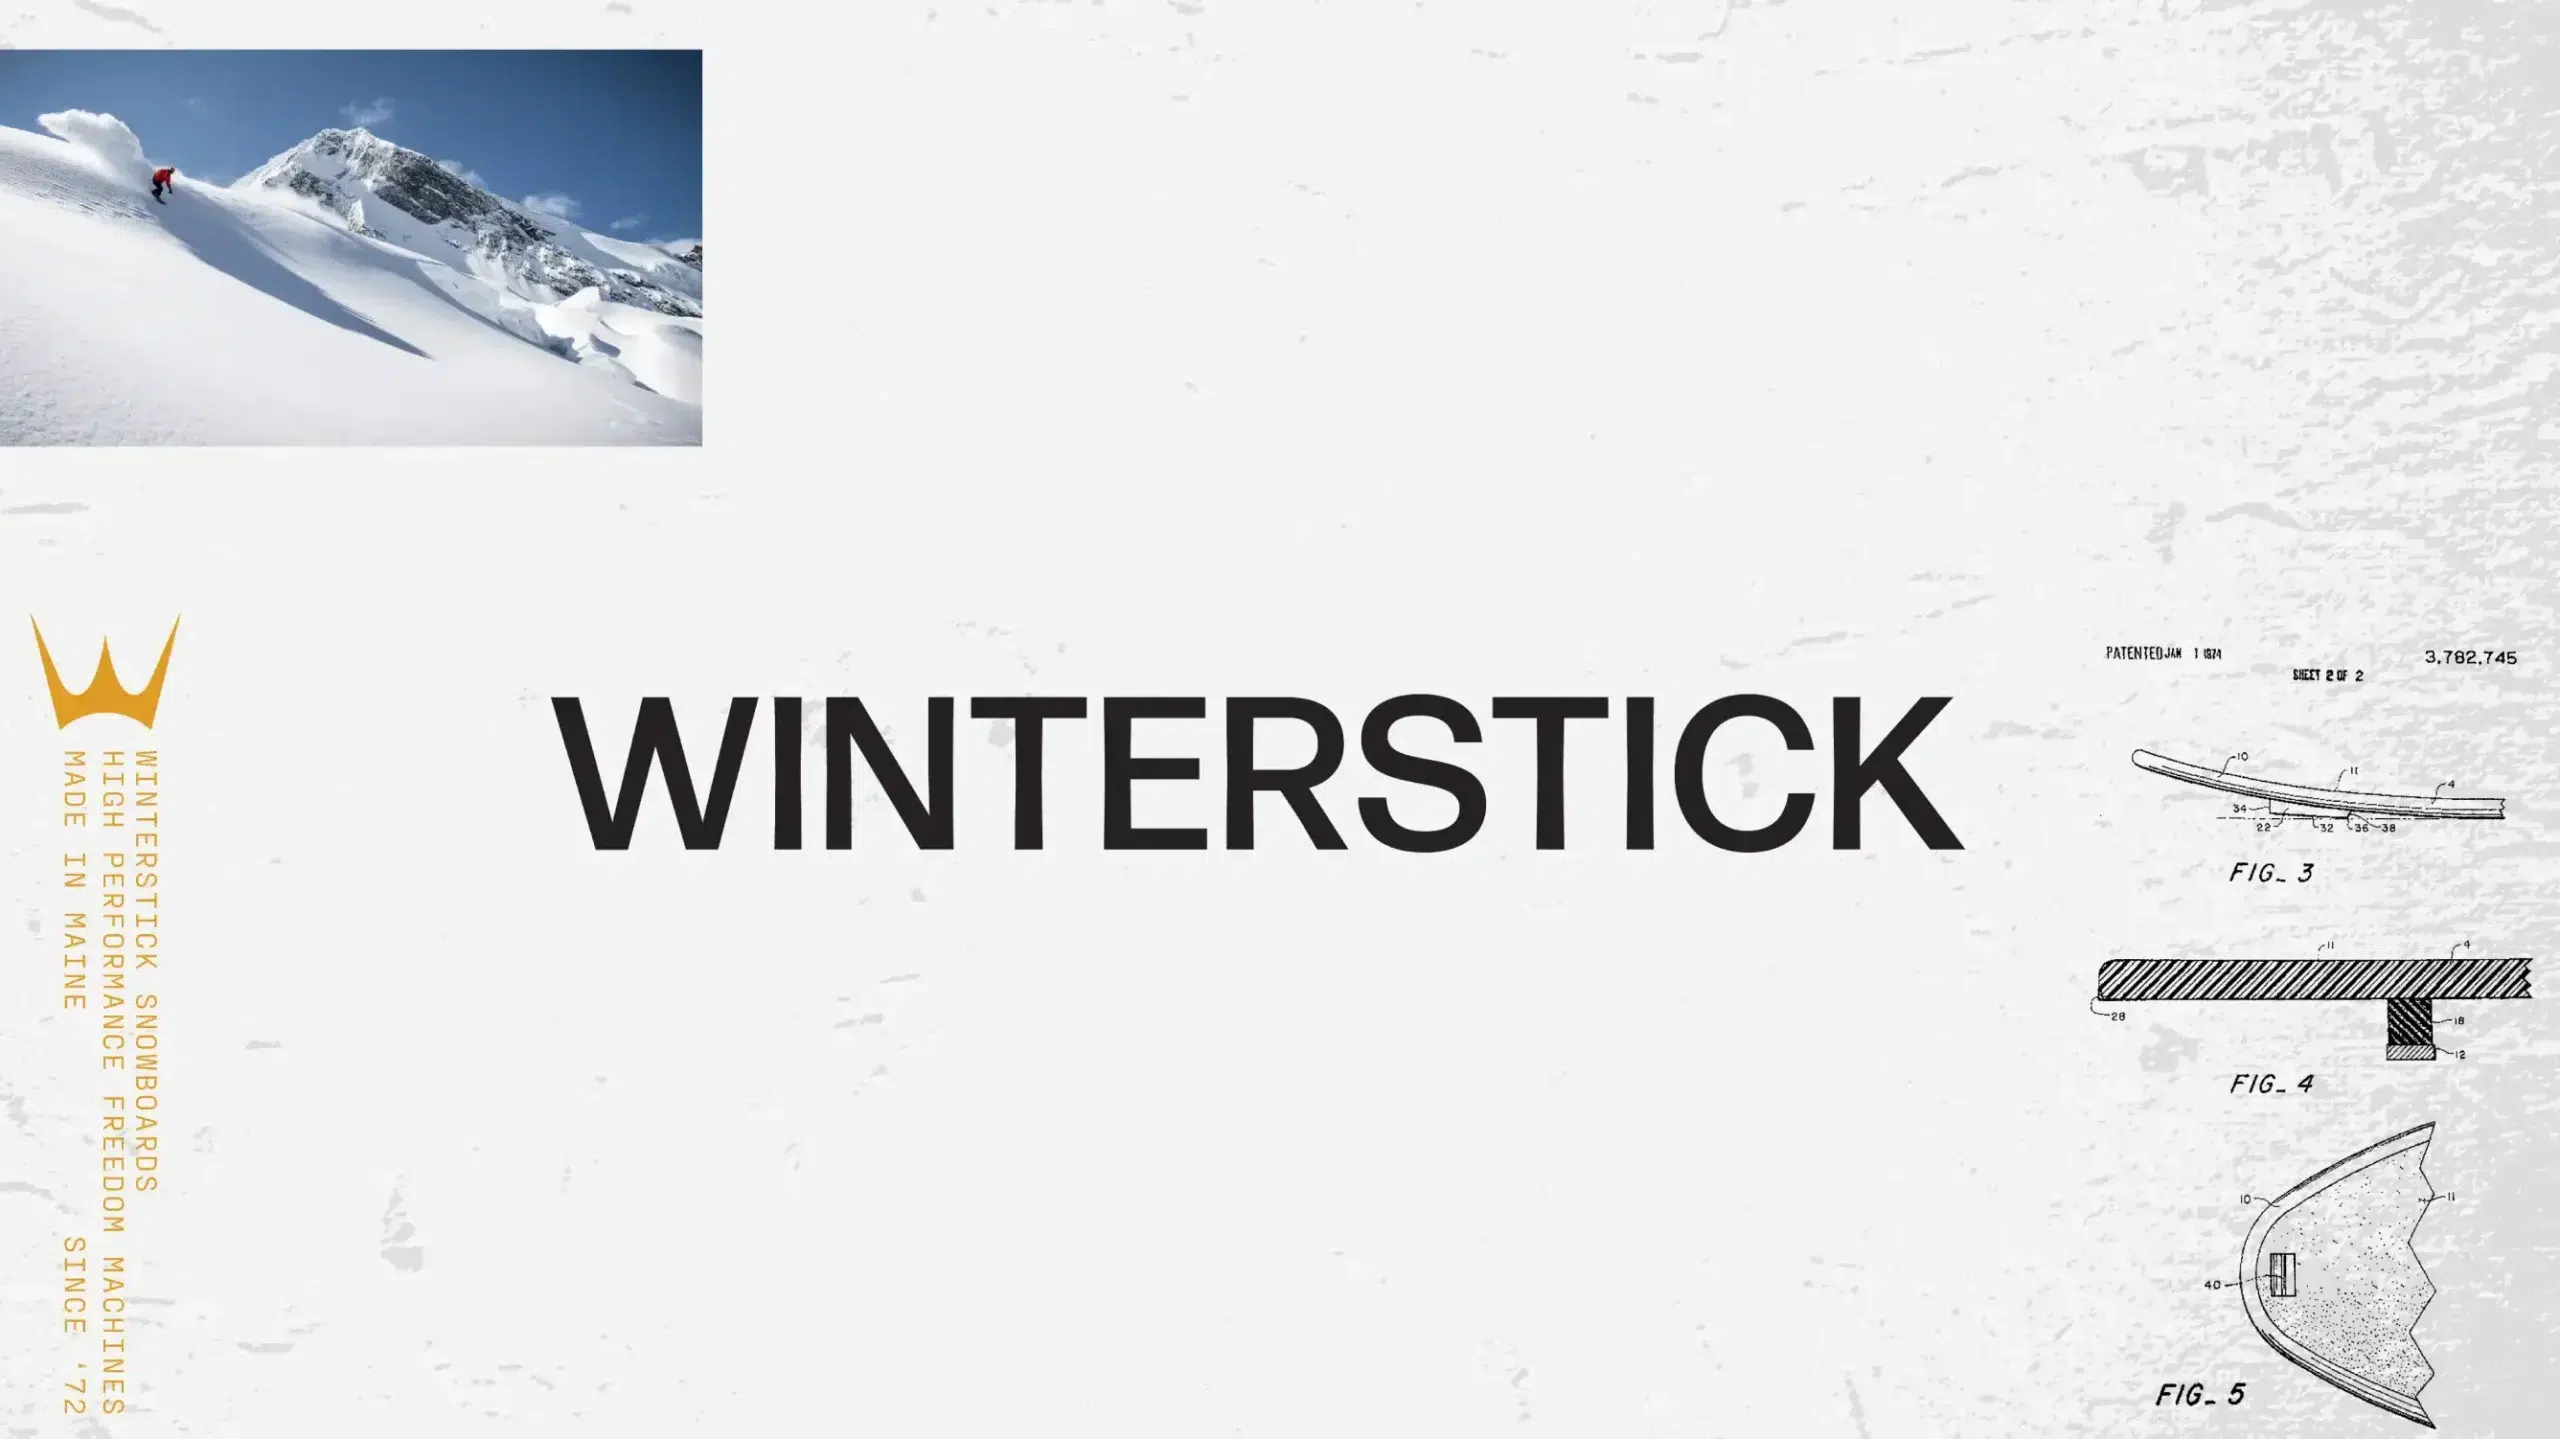 Winterstick